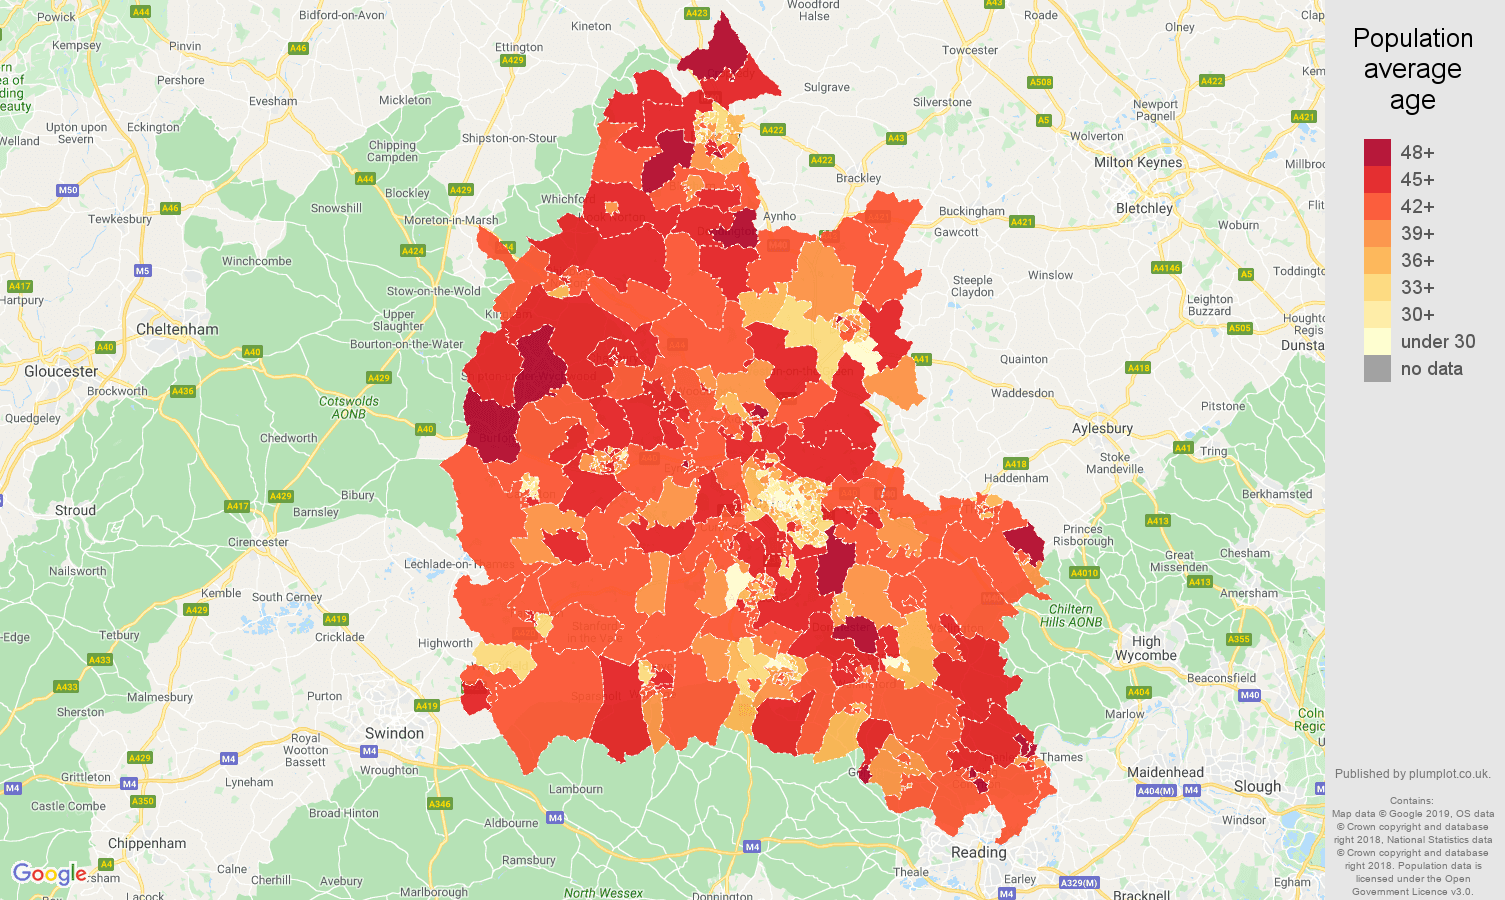 Oxfordshire population average age map